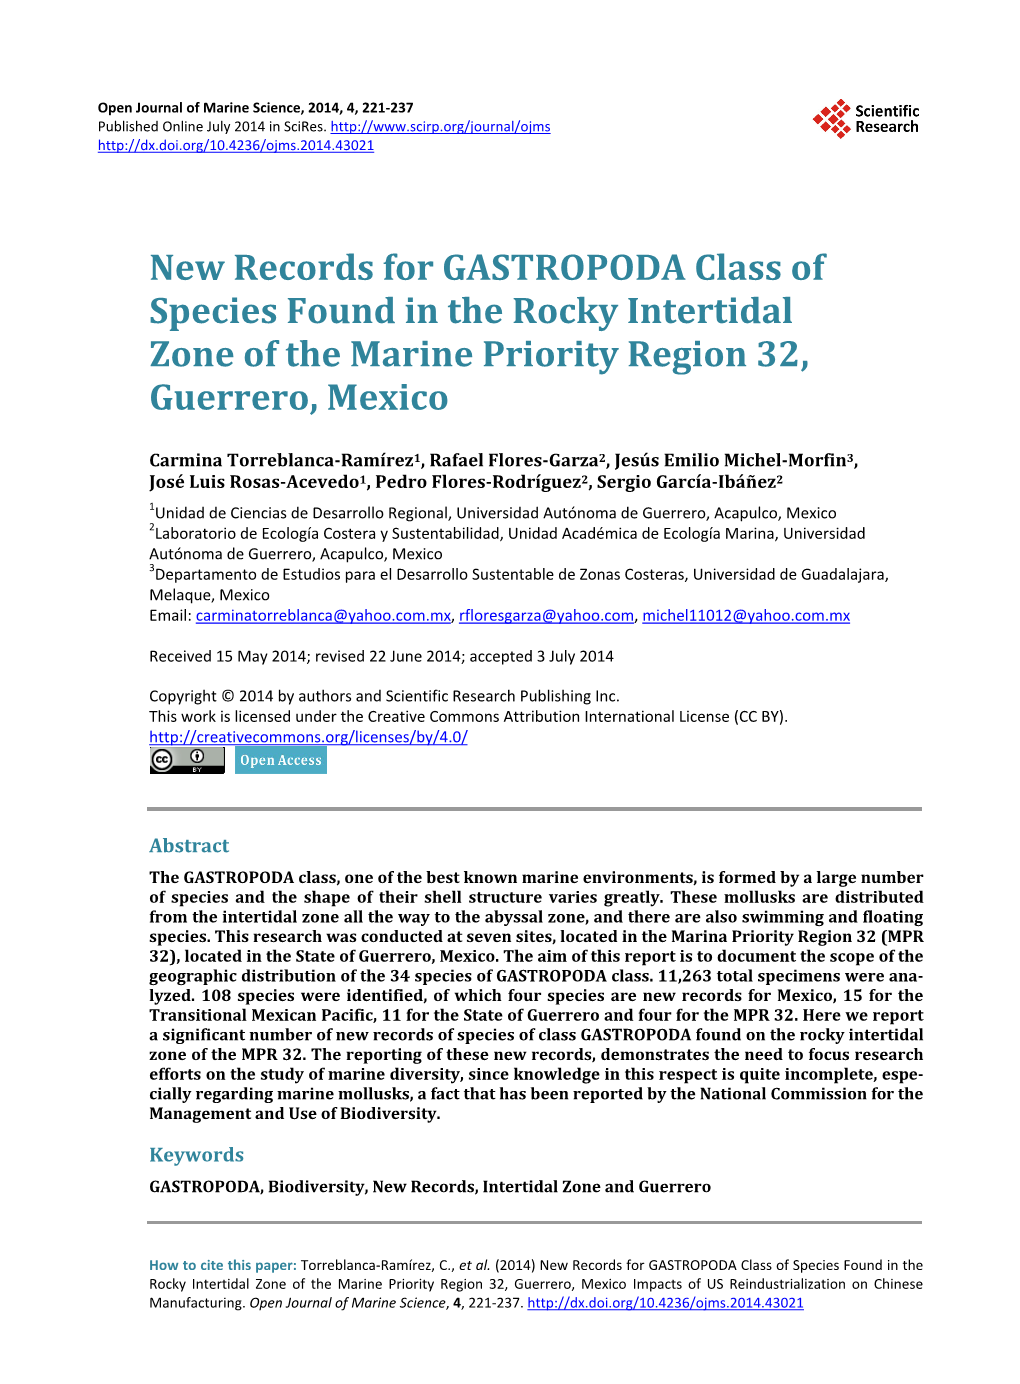 New Records for GASTROPODA Class of Species Found in the Rocky Intertidal Zone of the Marine Priority Region 32, Guerrero, Mexico